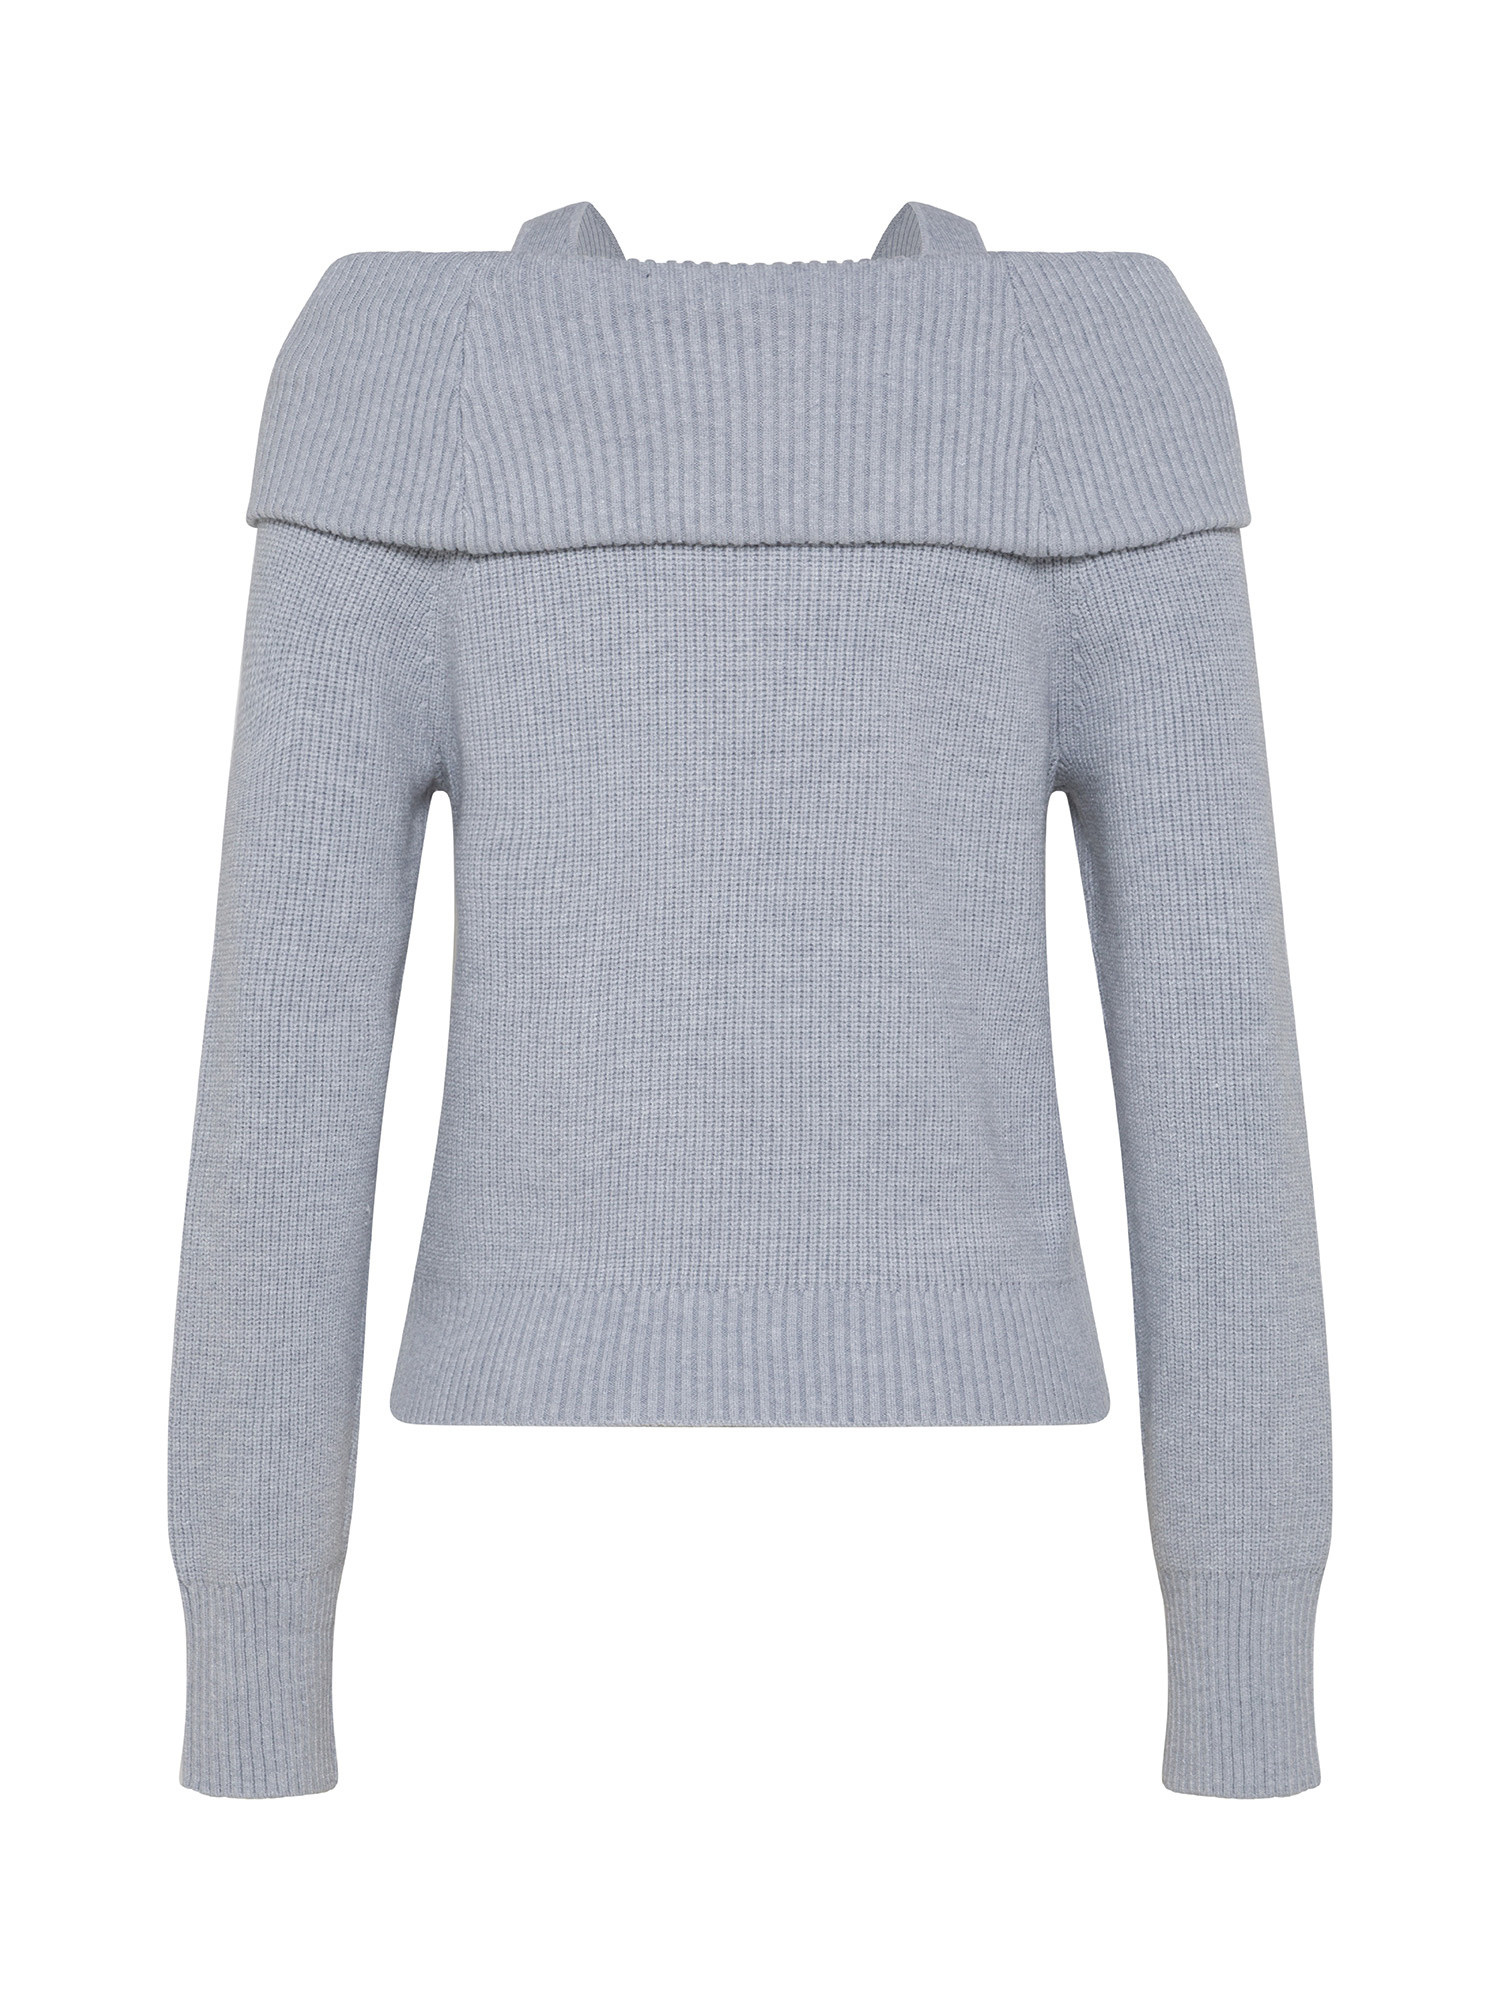 DKNY - Shoulder off sweater, White, large image number 1